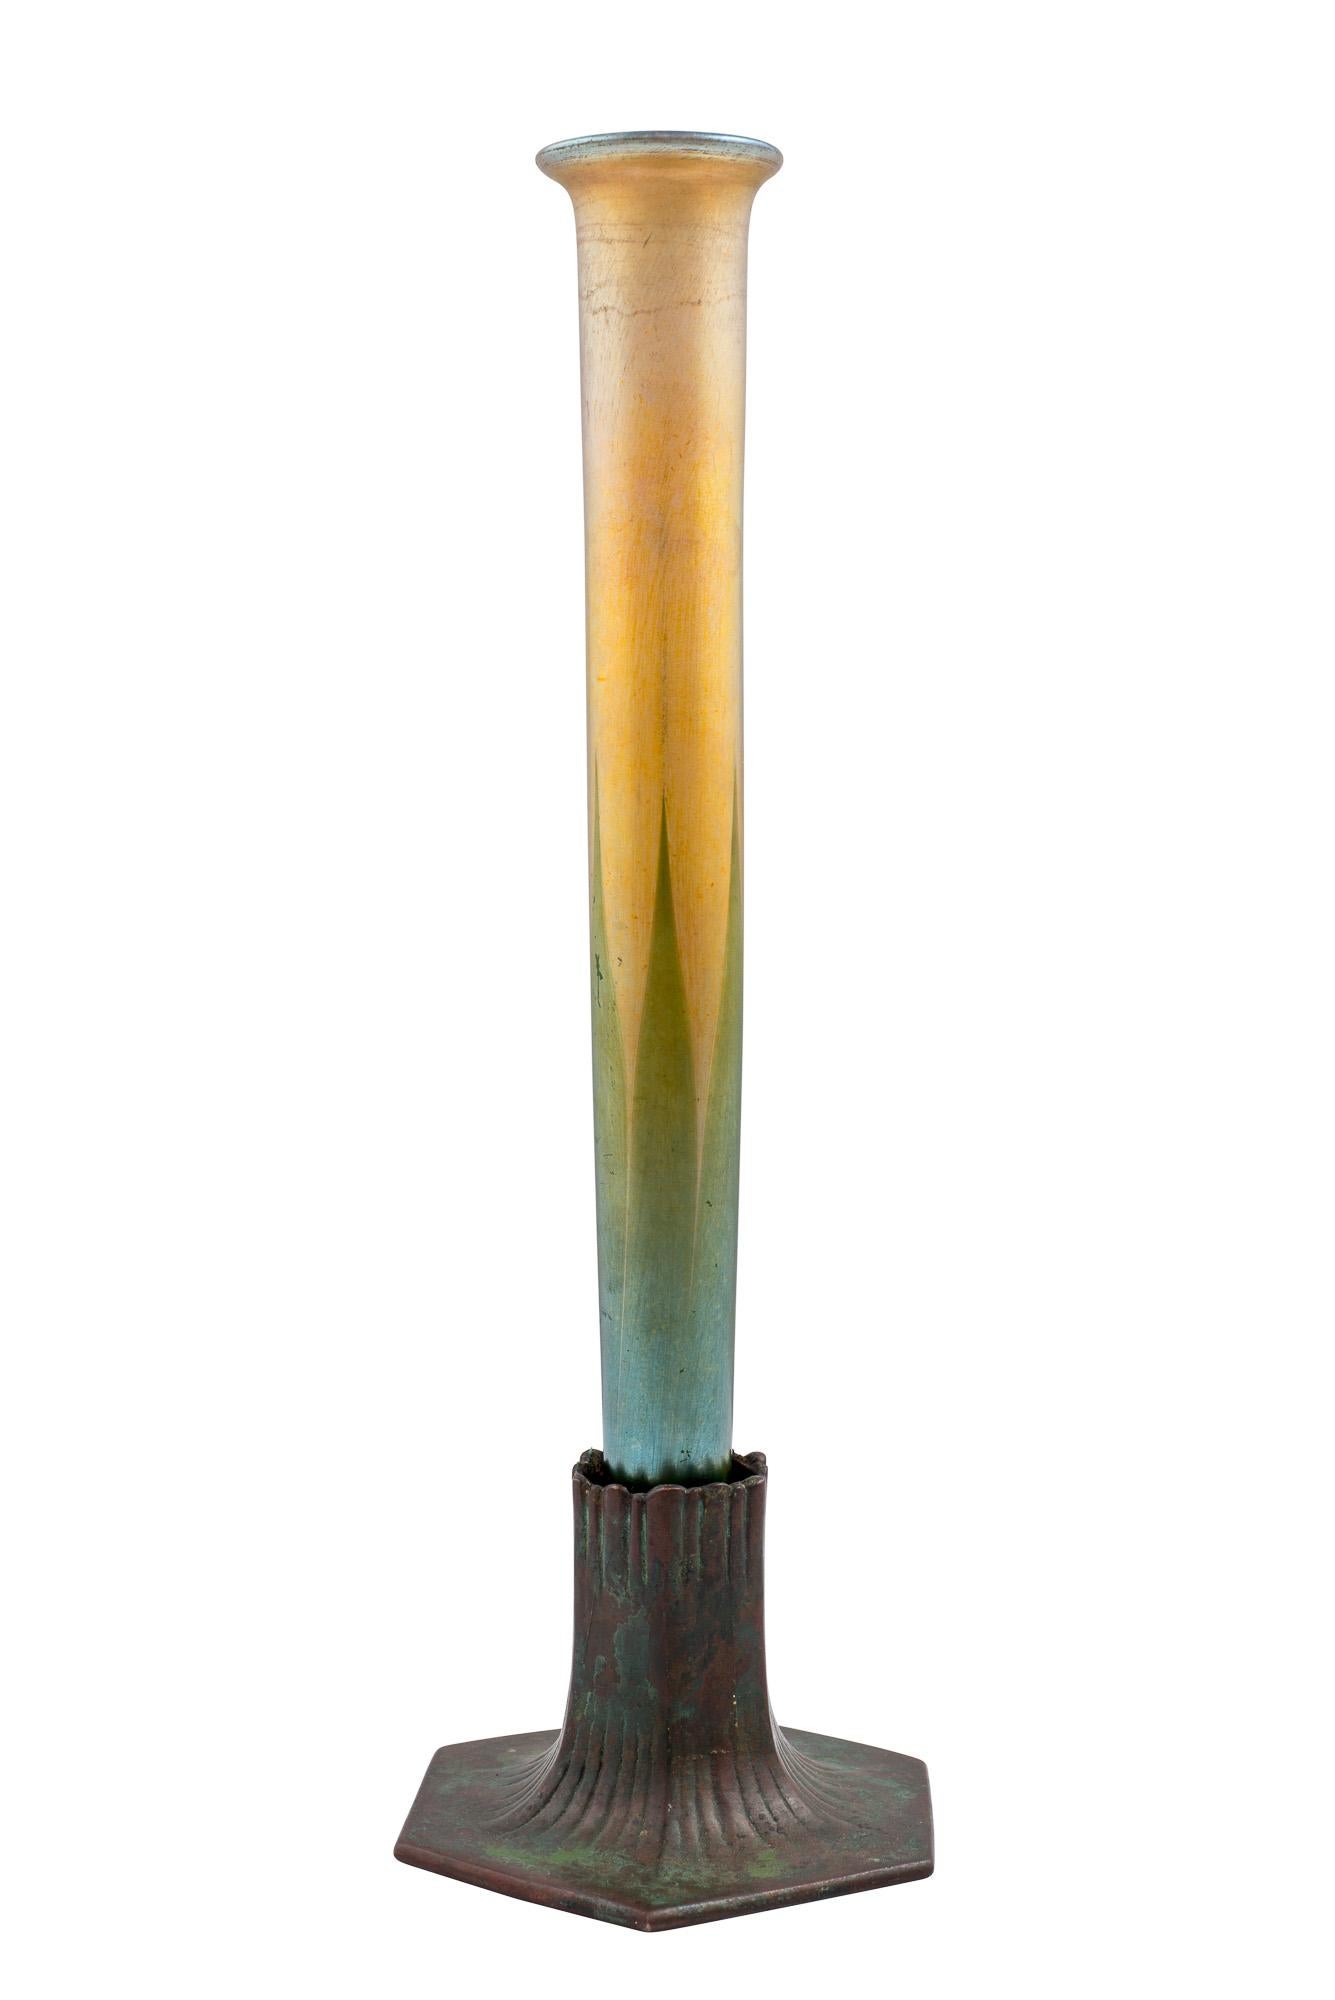 Art Nouveau Louis Comfort Tiffany, Tiffany Studios New York Favrille Glass Soliflor Vase For Sale